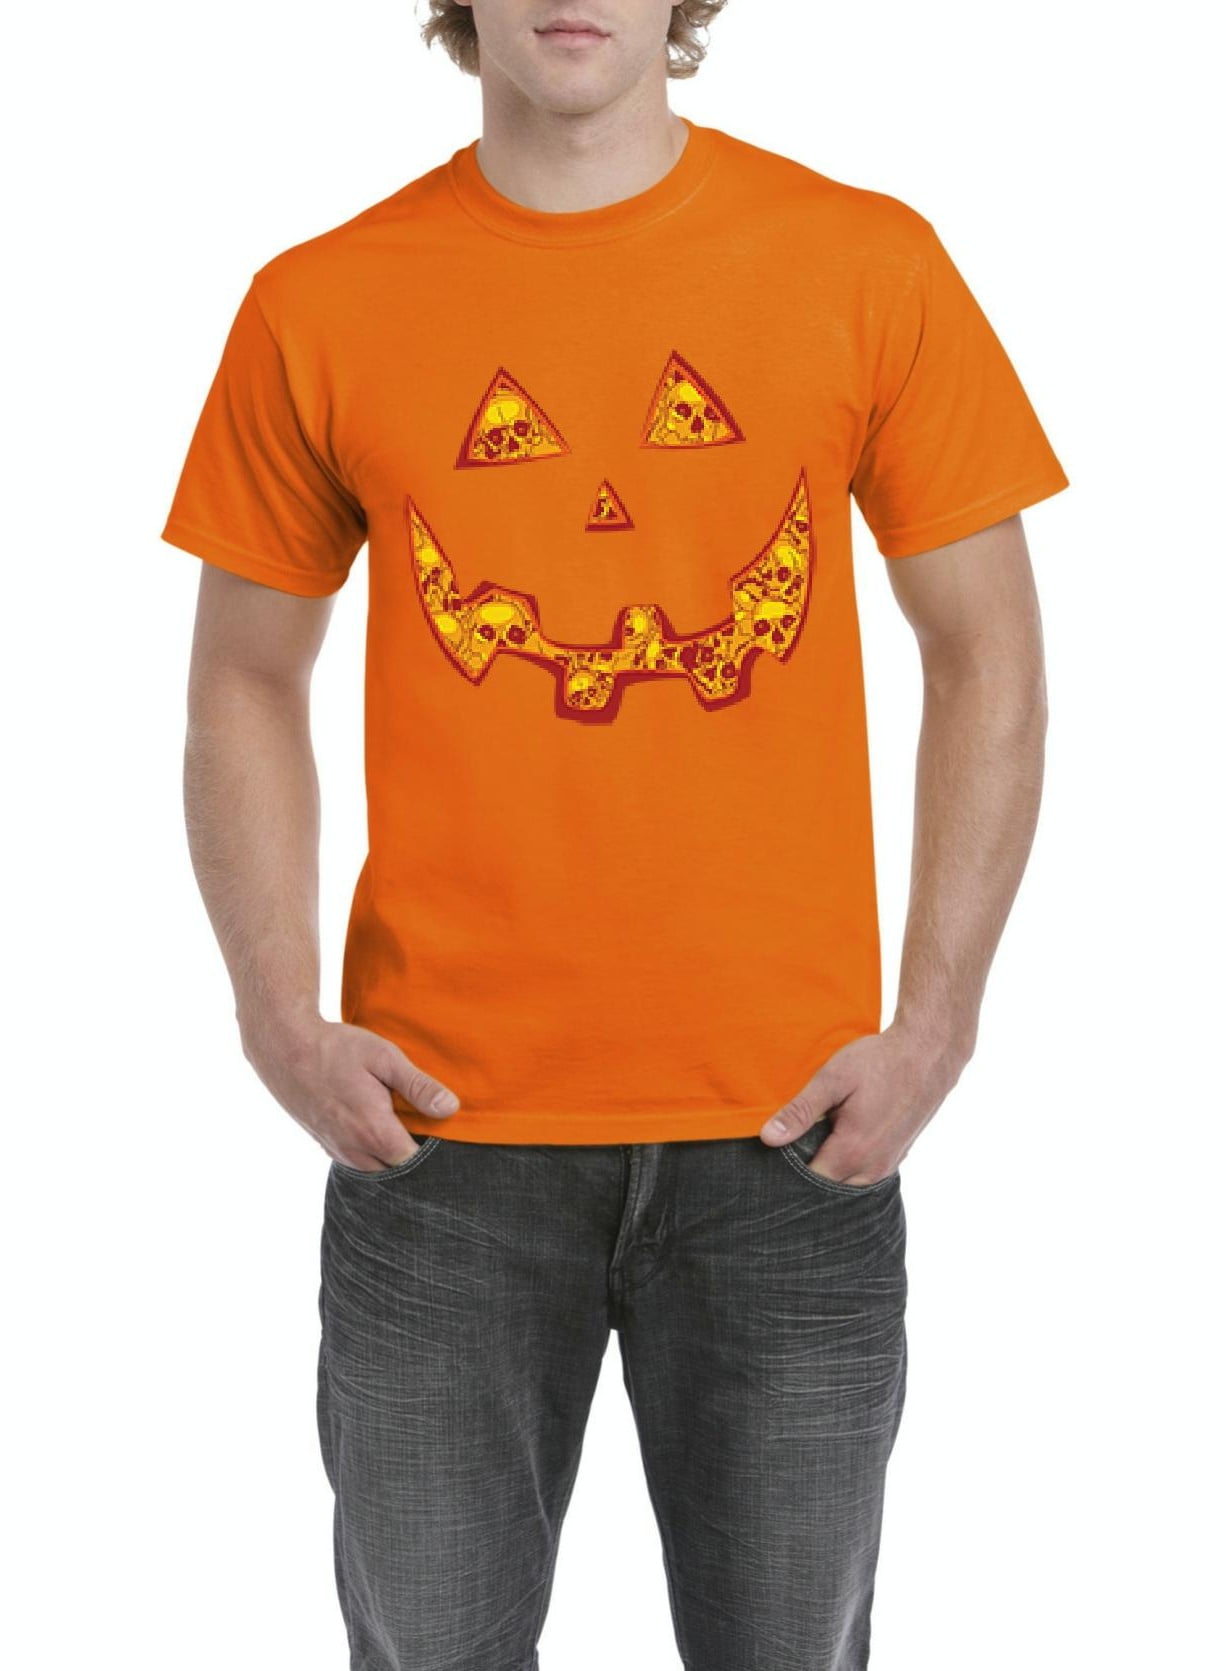 Details about   Halloween Men's Tee Shirt~Pumpkin~Orange 